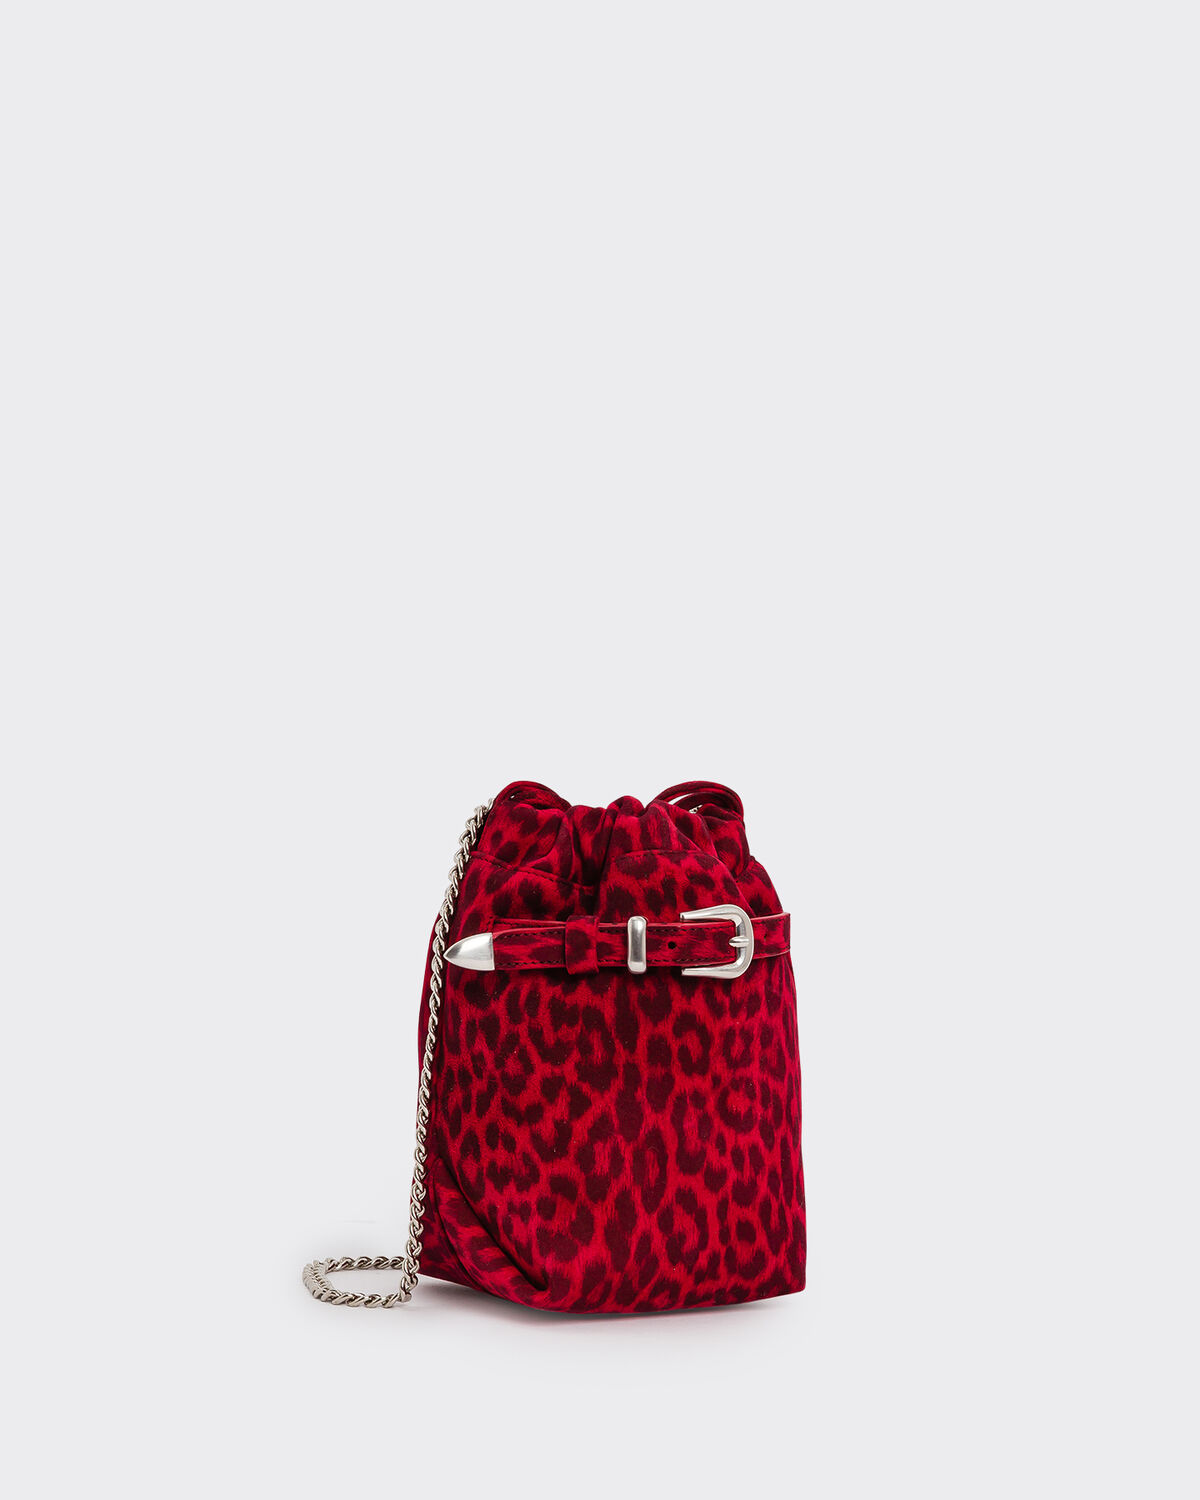 Beltypmch Bag Red by IRO Paris